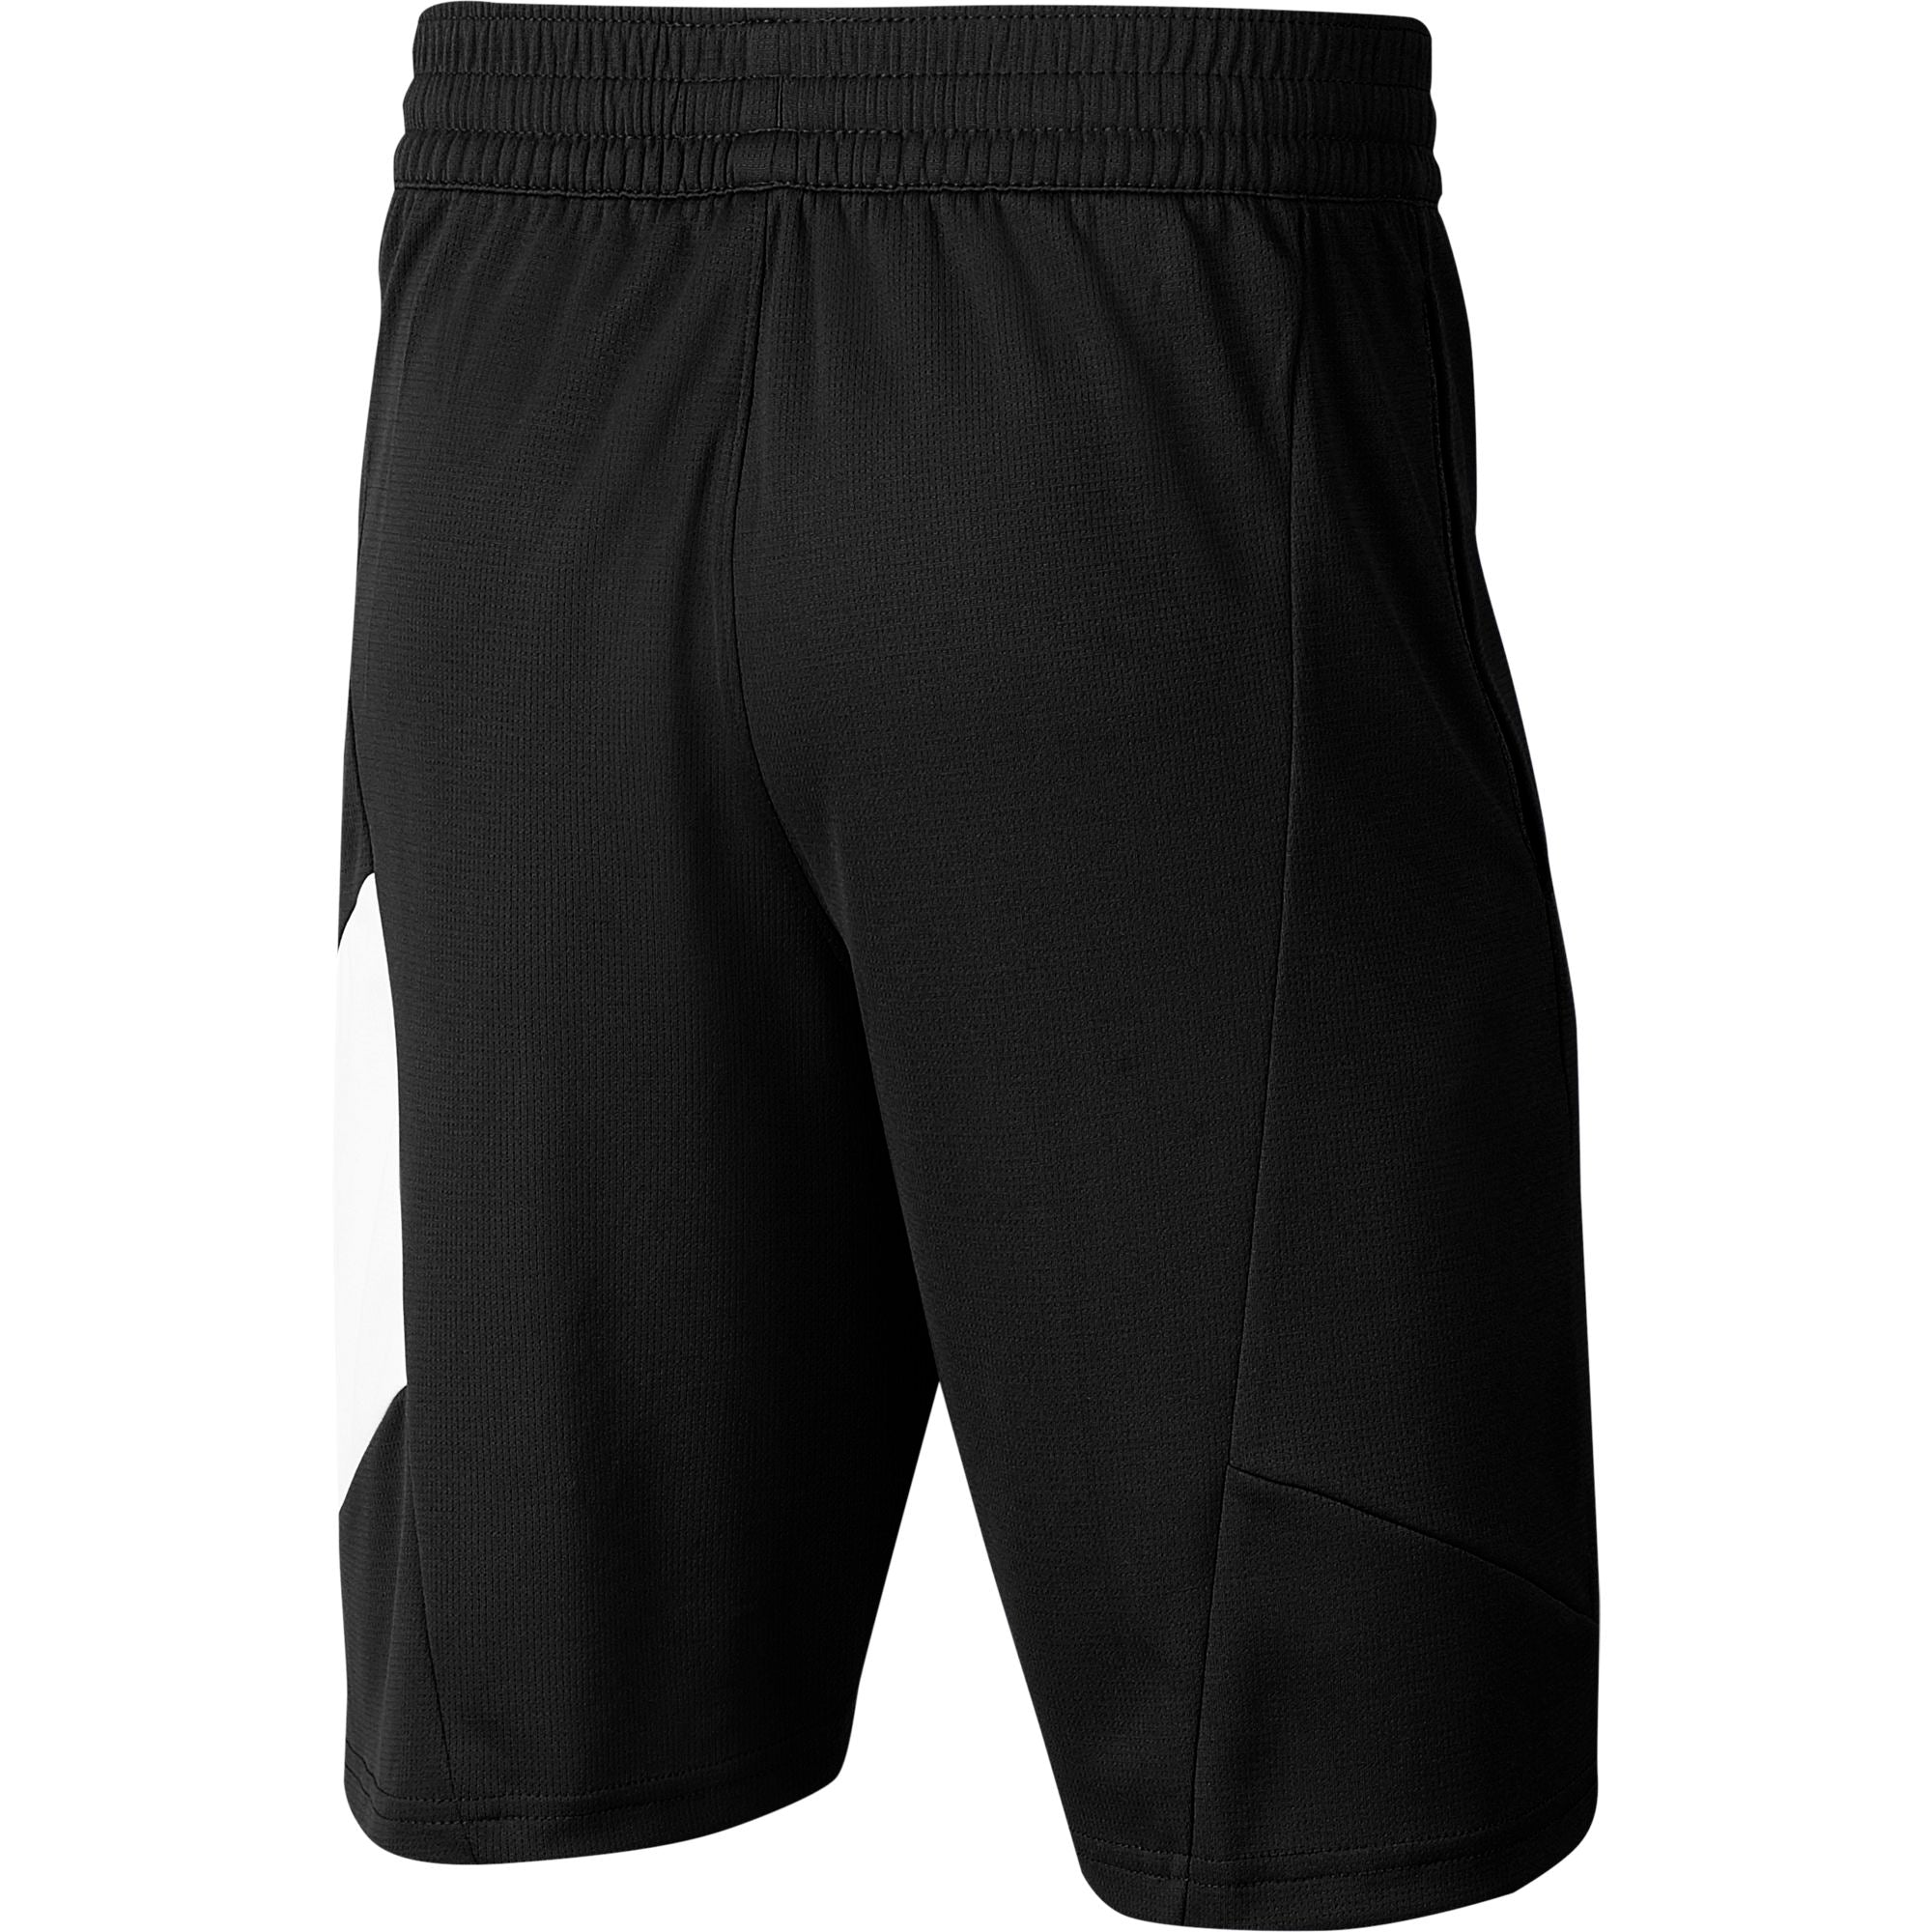 Nike Kids Elite Graphic Basketball Shorts - Black/White – SwiSh basketball